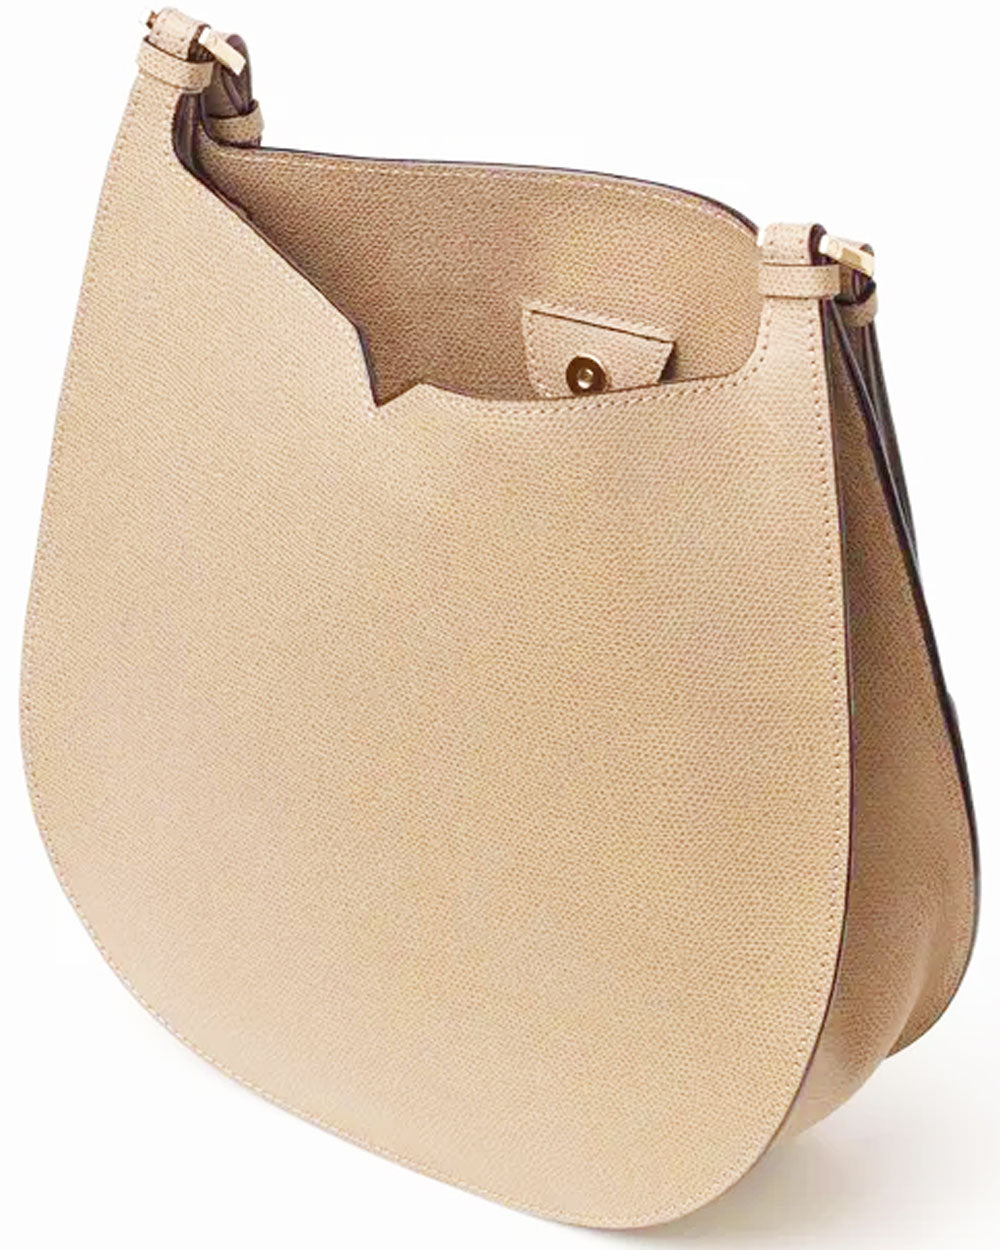 Medium Hobo Shoulder Bag in Beige